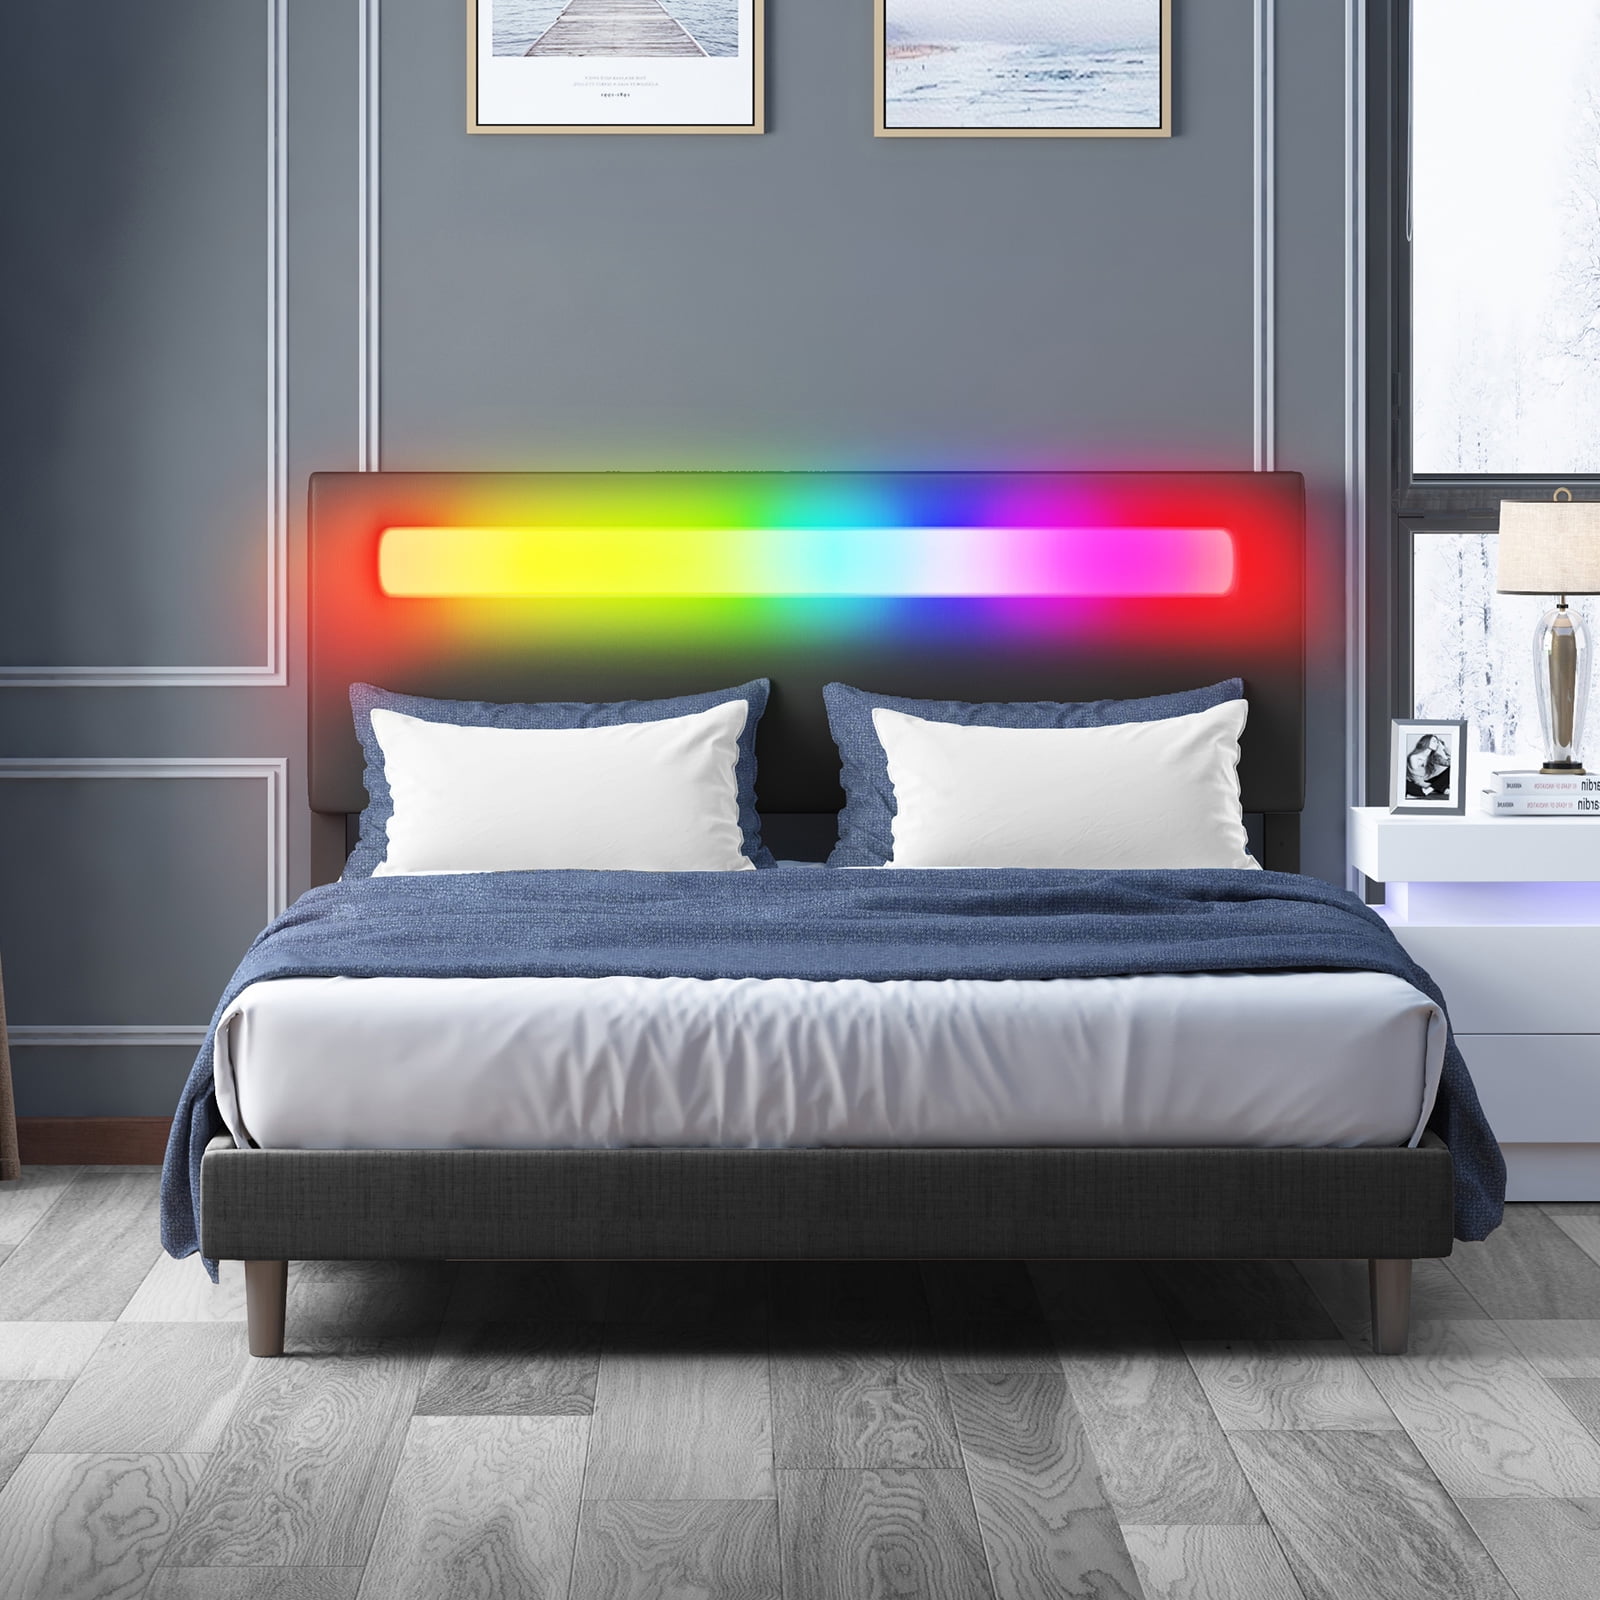 ZAFLY Platform Bed Frame with Smart RGB LED Light Bar, Queen Size Bed ...